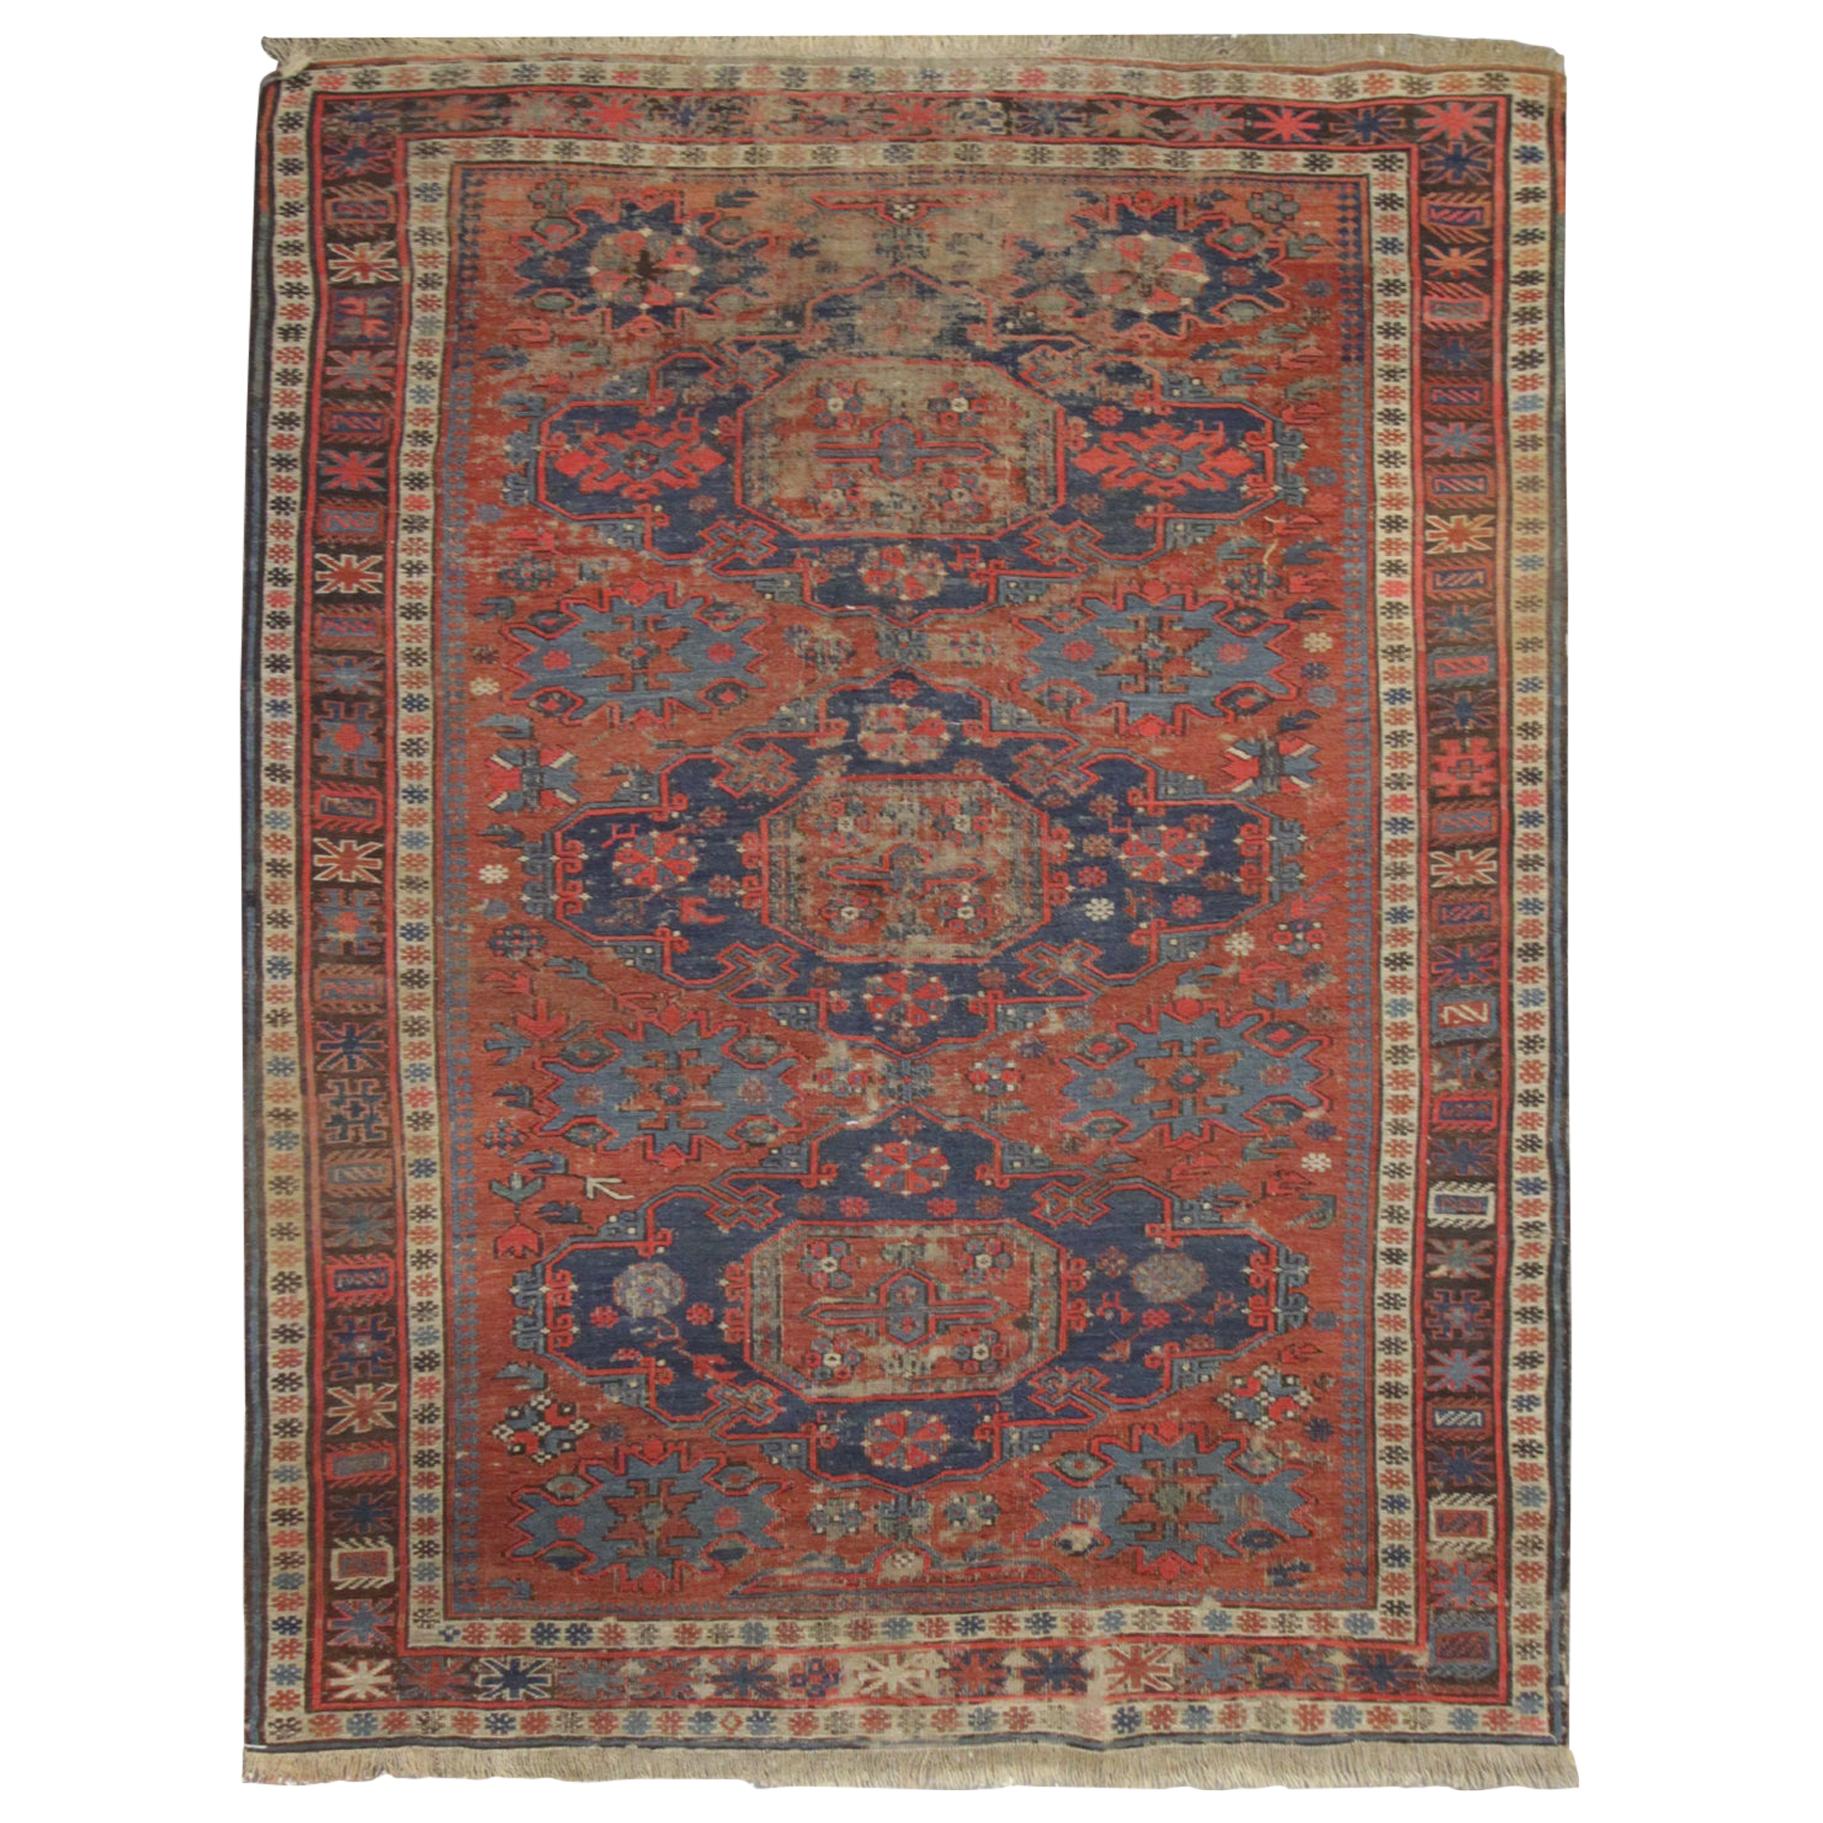 Handmade Carpet Caucasian Sumakh Kilim Rug Oriental Traditional Wool Area Rug